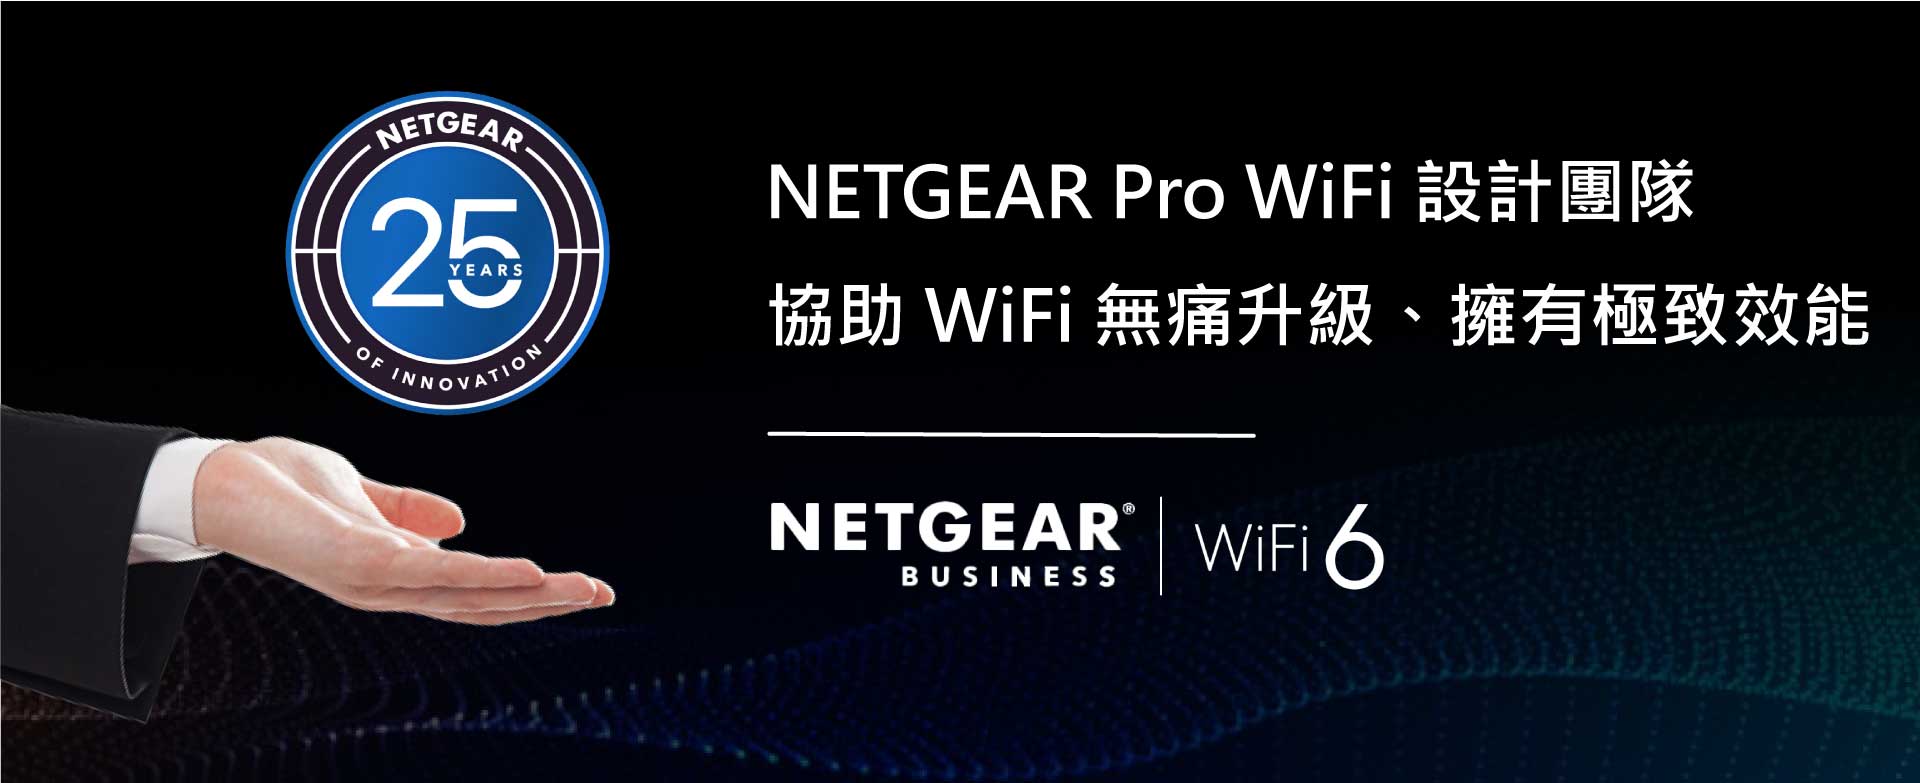 NETGEAR Pro WiFi設計團隊